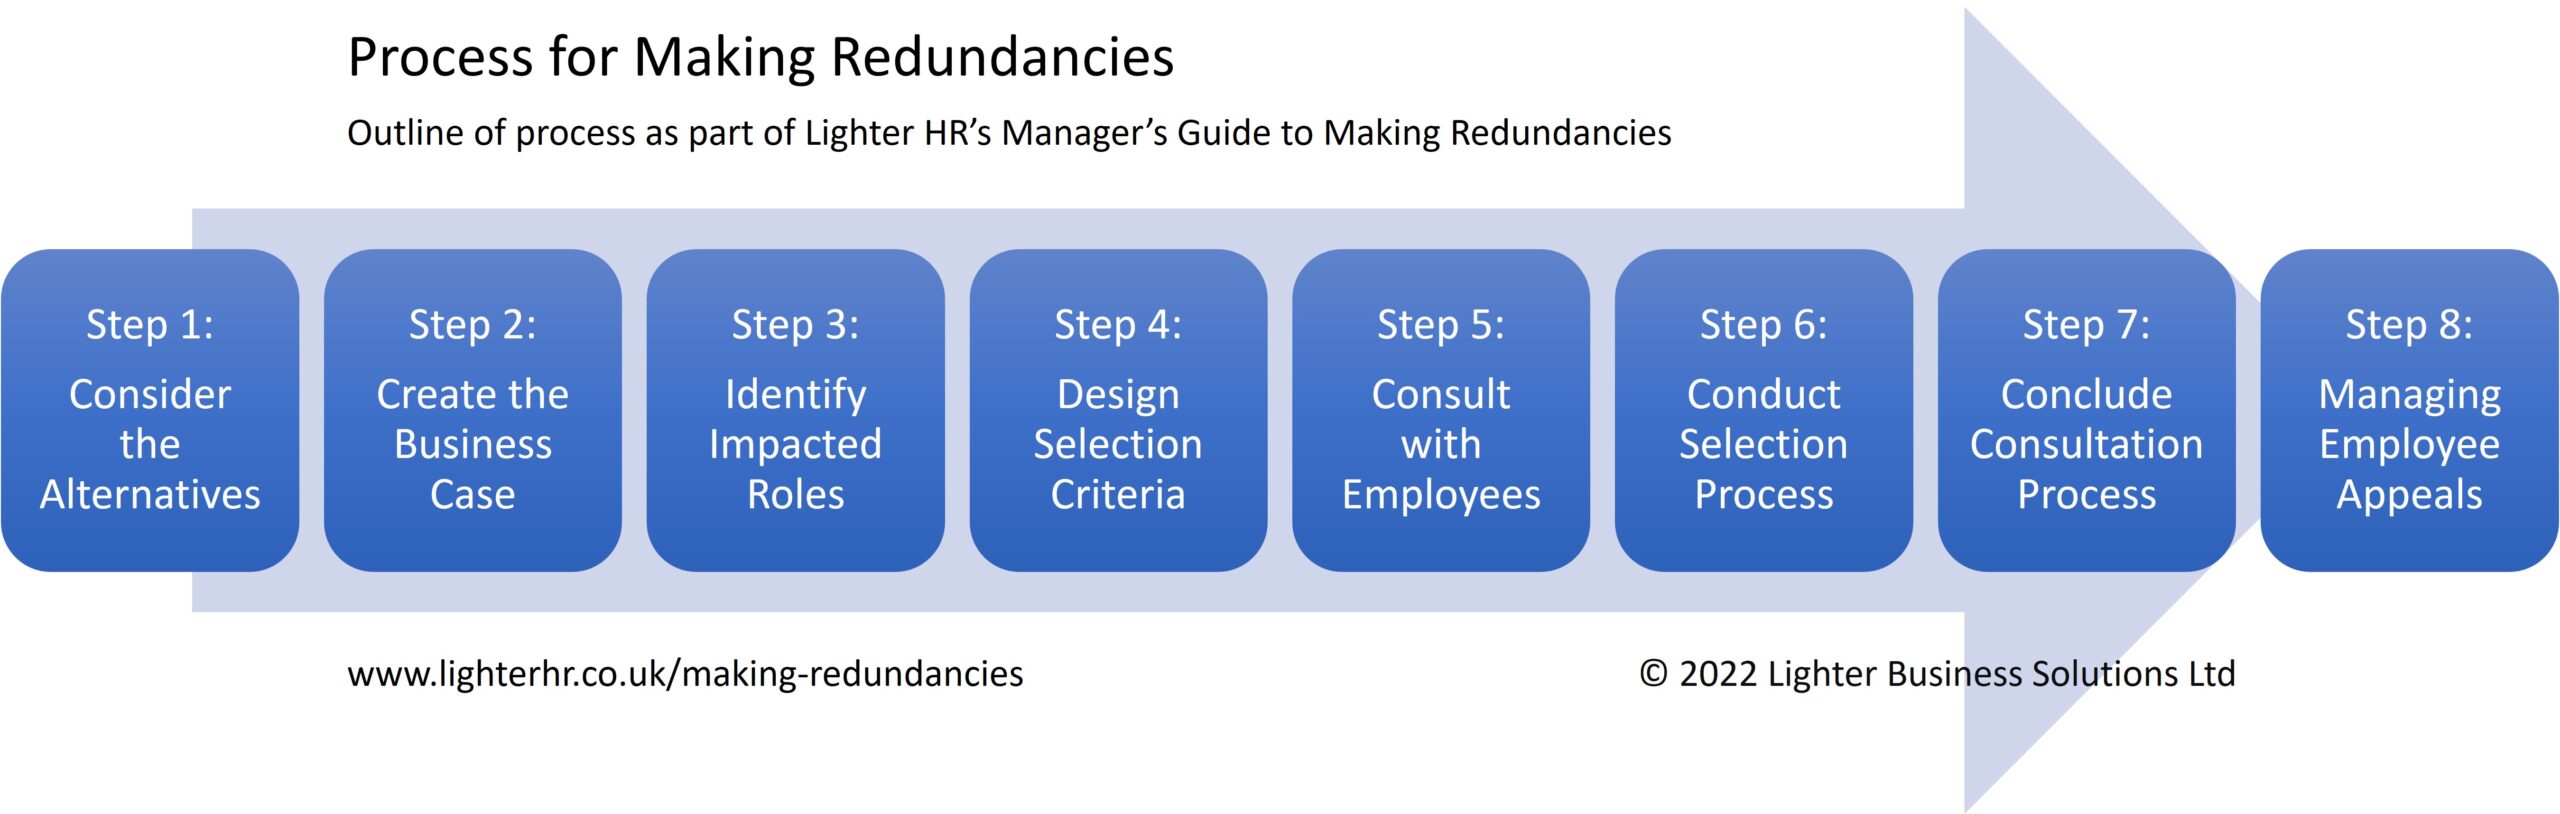 Process for Making Redundancies - Lighter HR